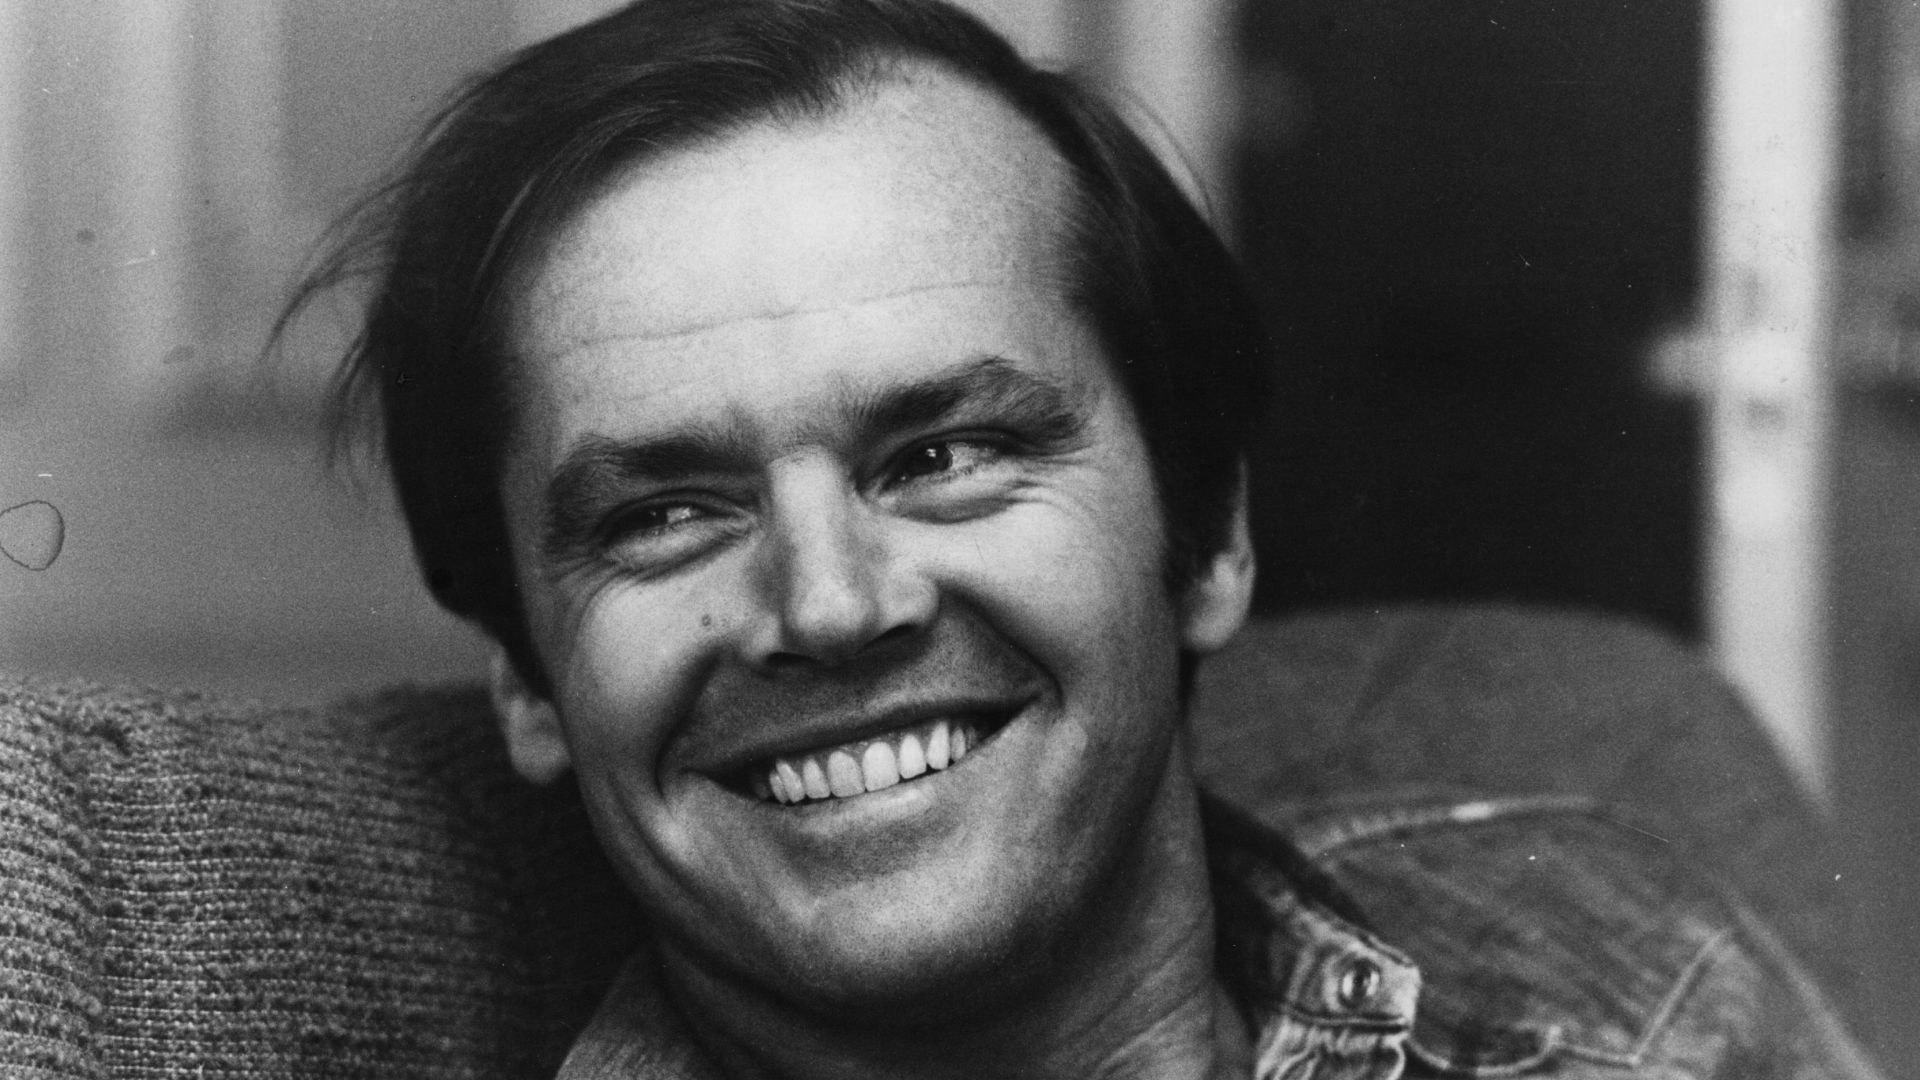 Jack Nicholson Smiling